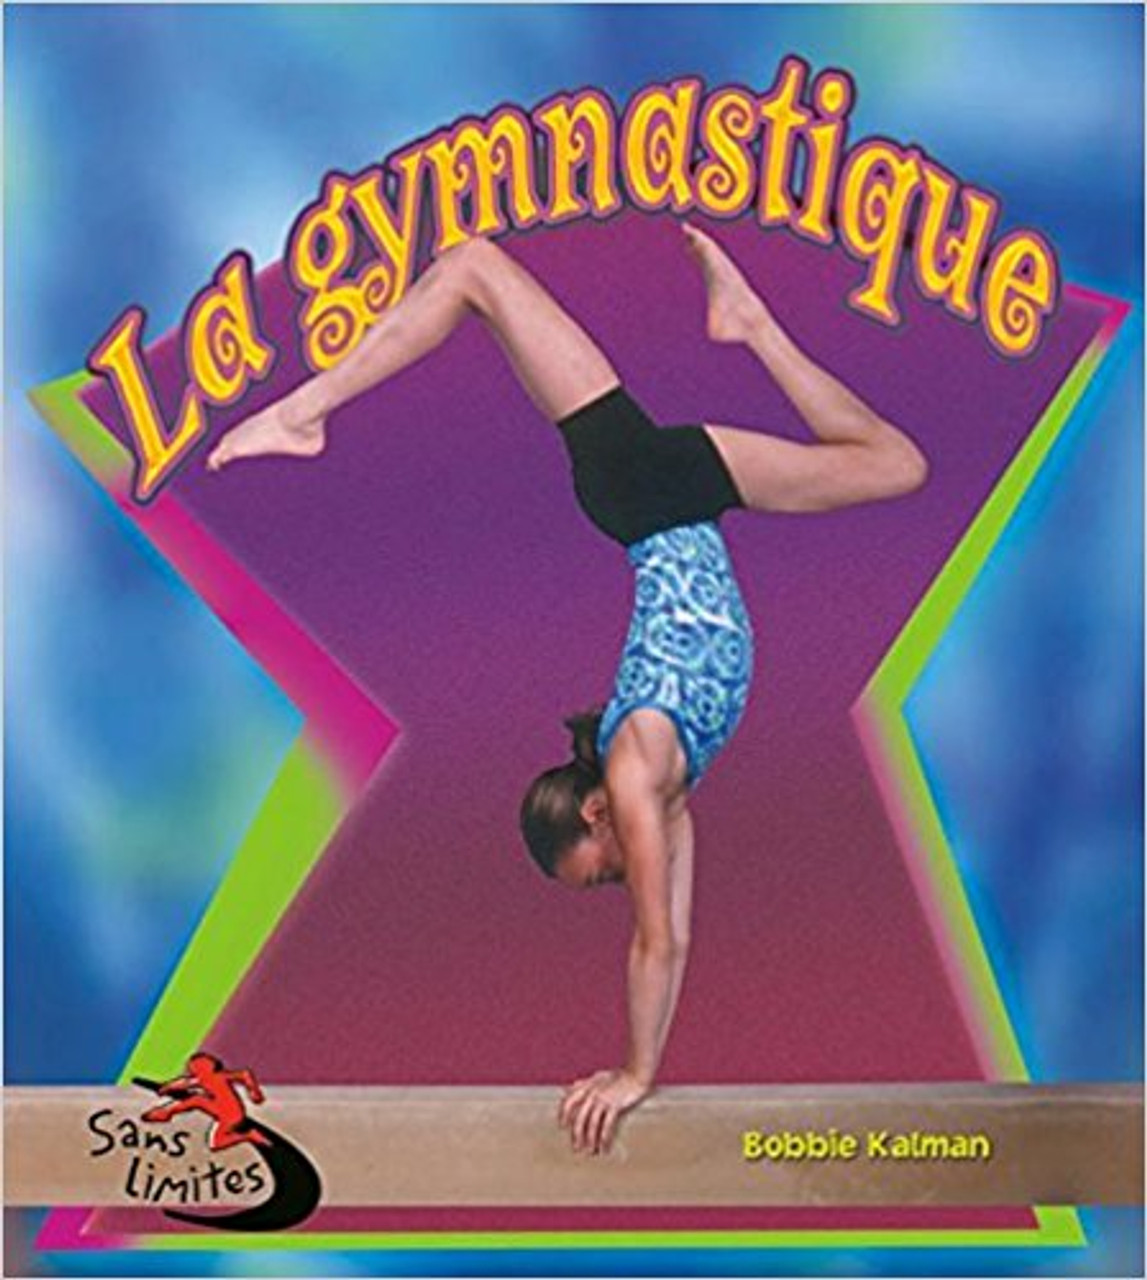 Le Gymnastique by Bobbie Kalman